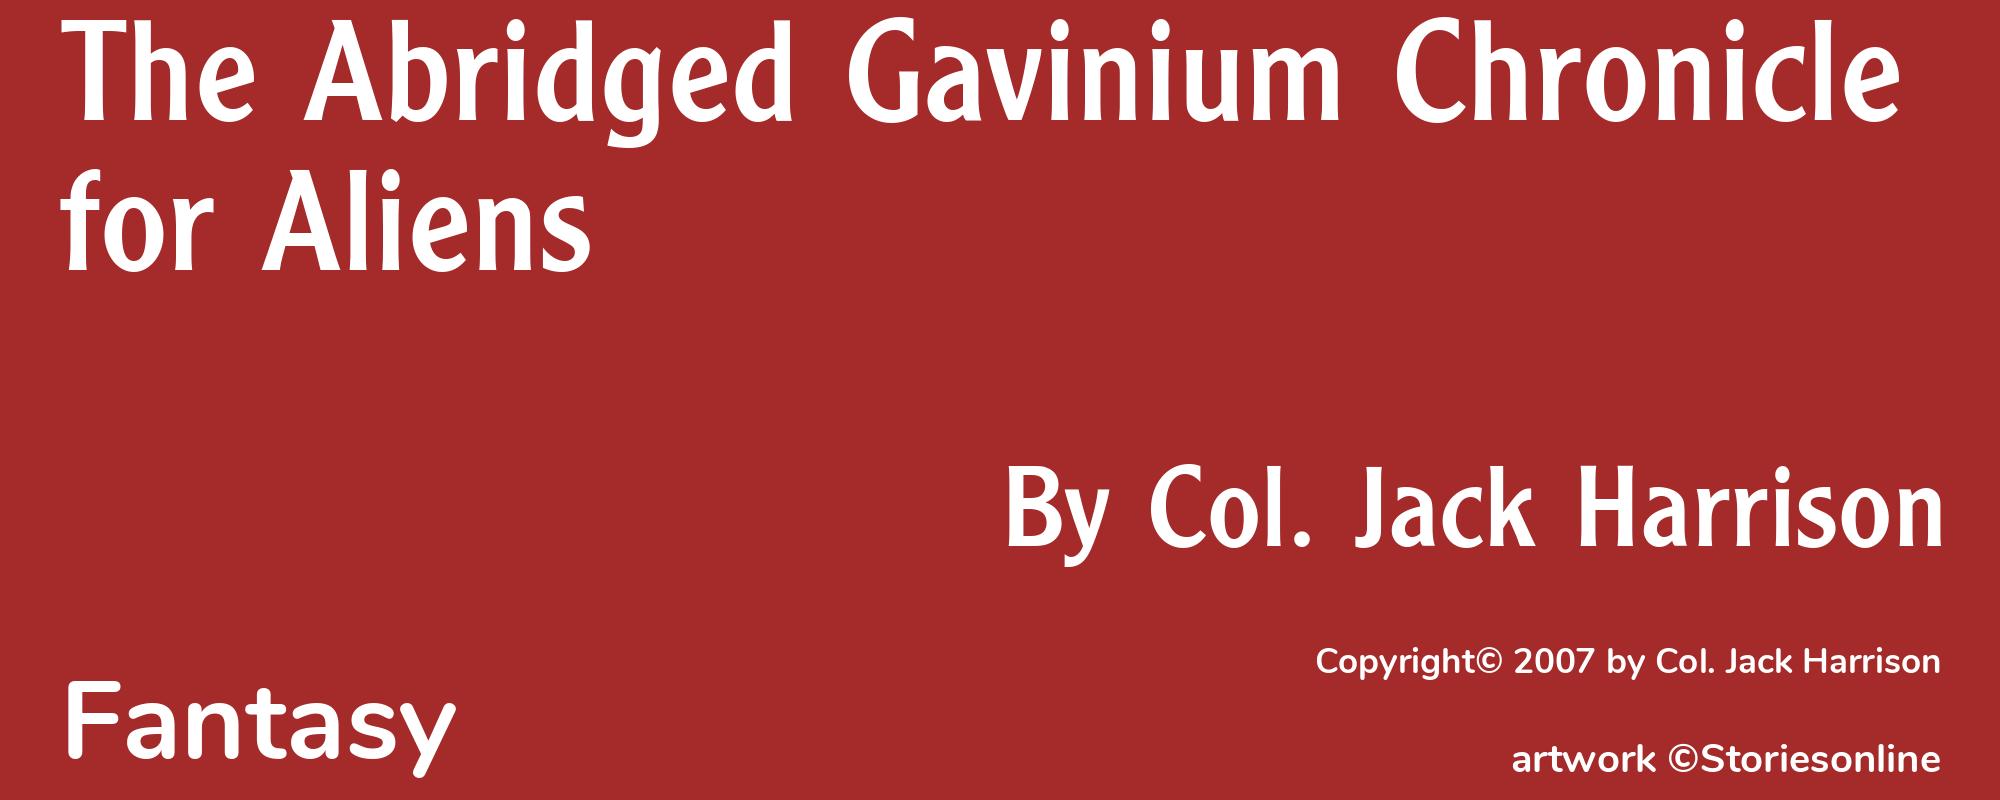 The Abridged Gavinium Chronicle for Aliens - Cover